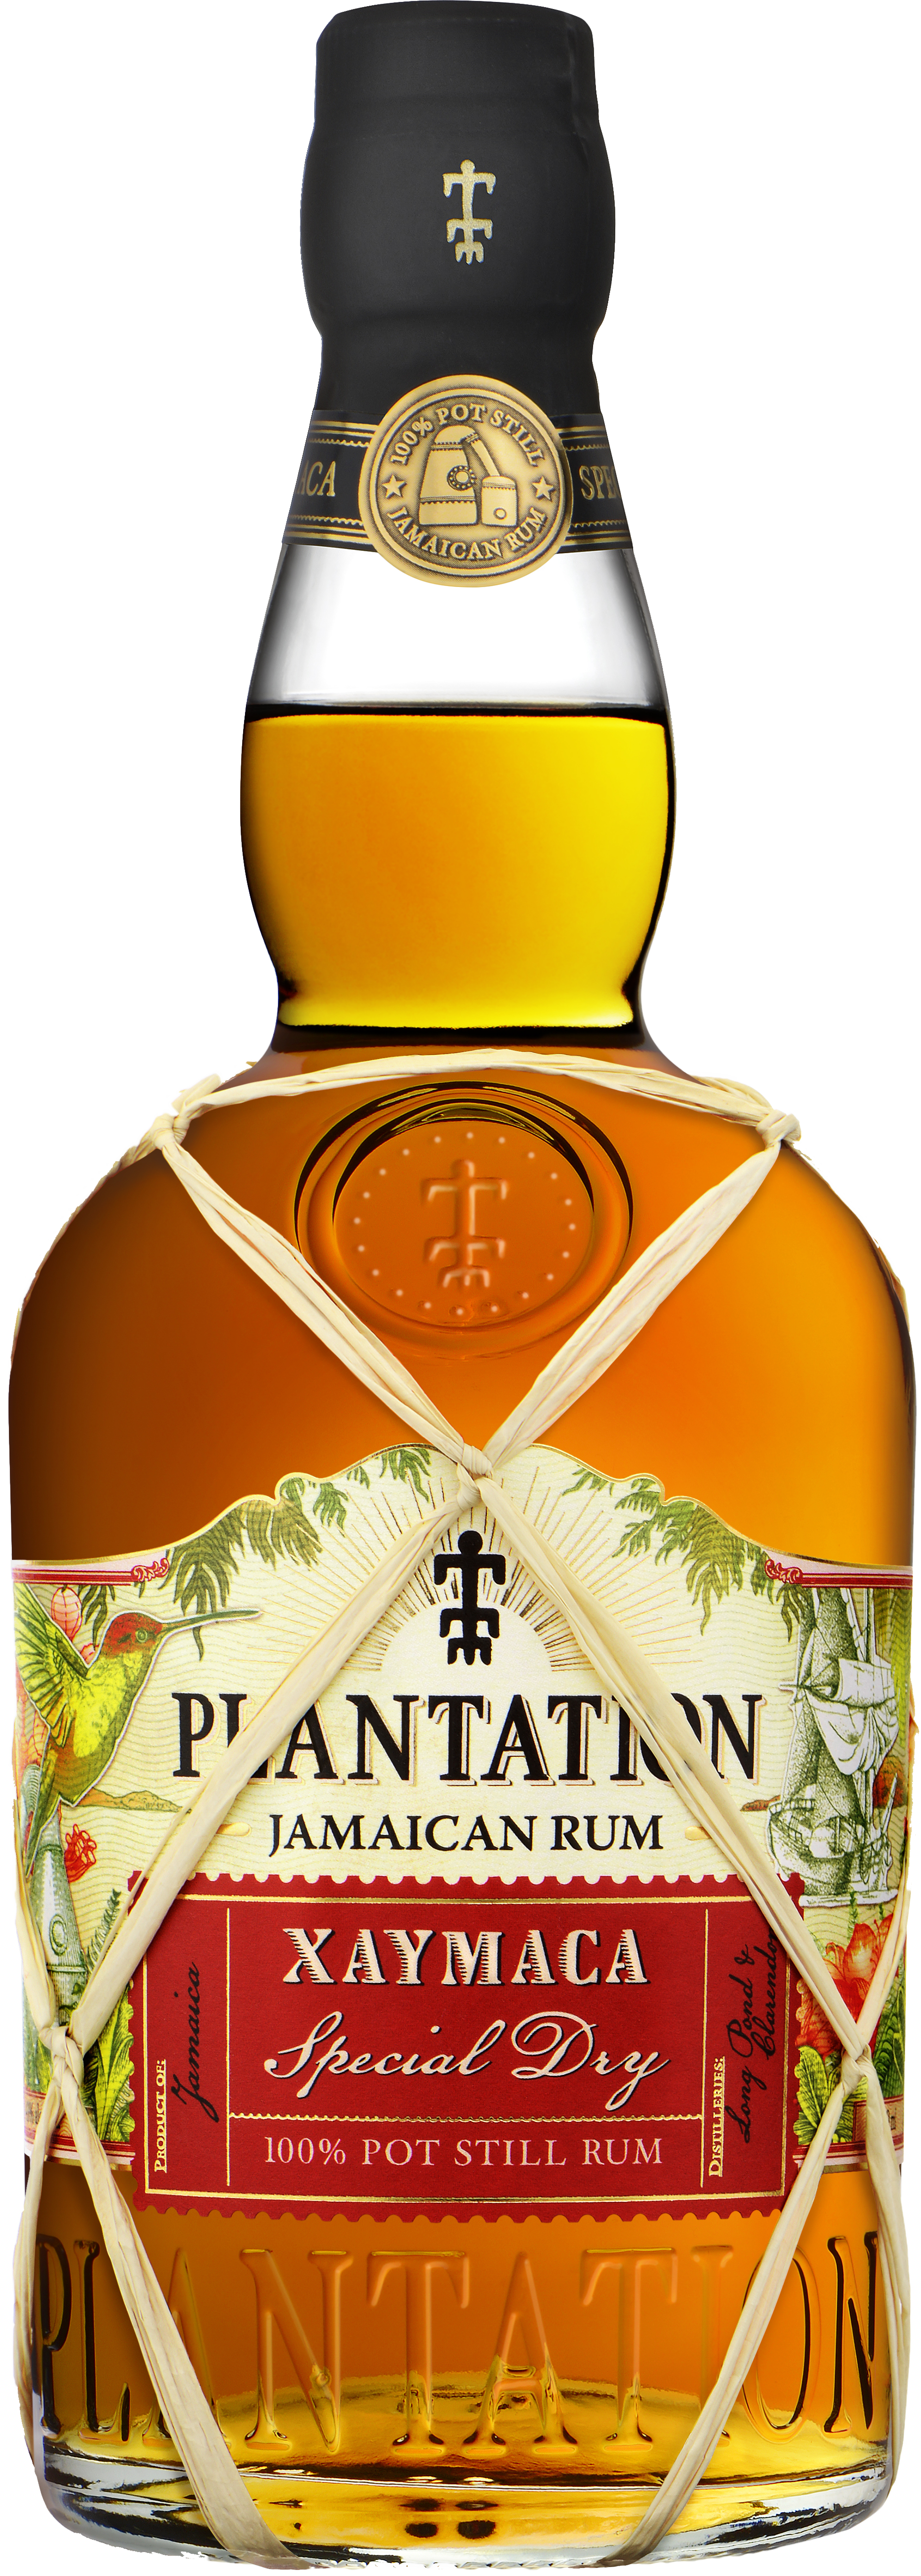 Plantation Rum Xaymaca Special Dry 43% 0,7l